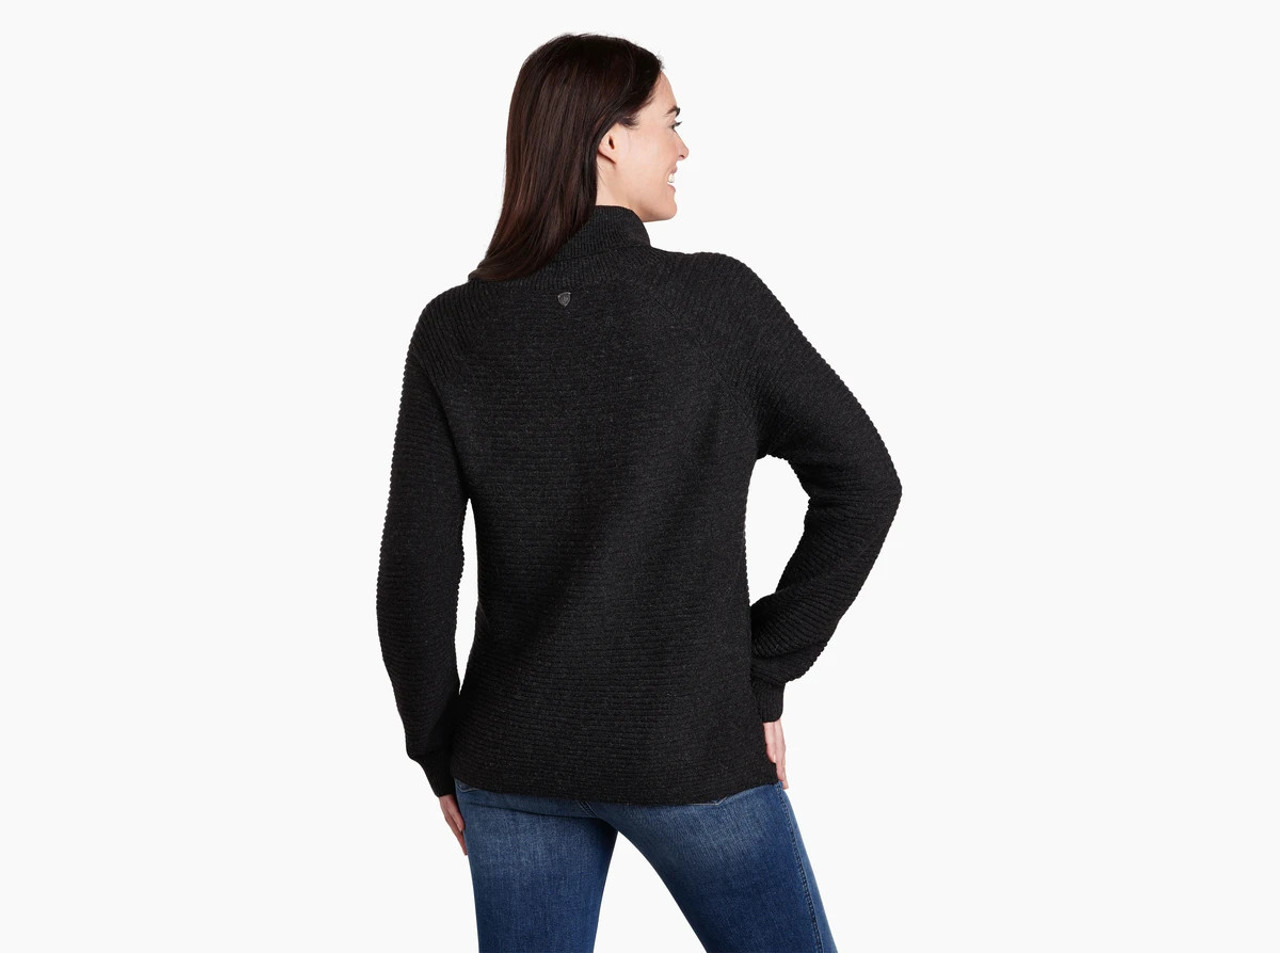 Kuhl - Solace Sweater W's - Black